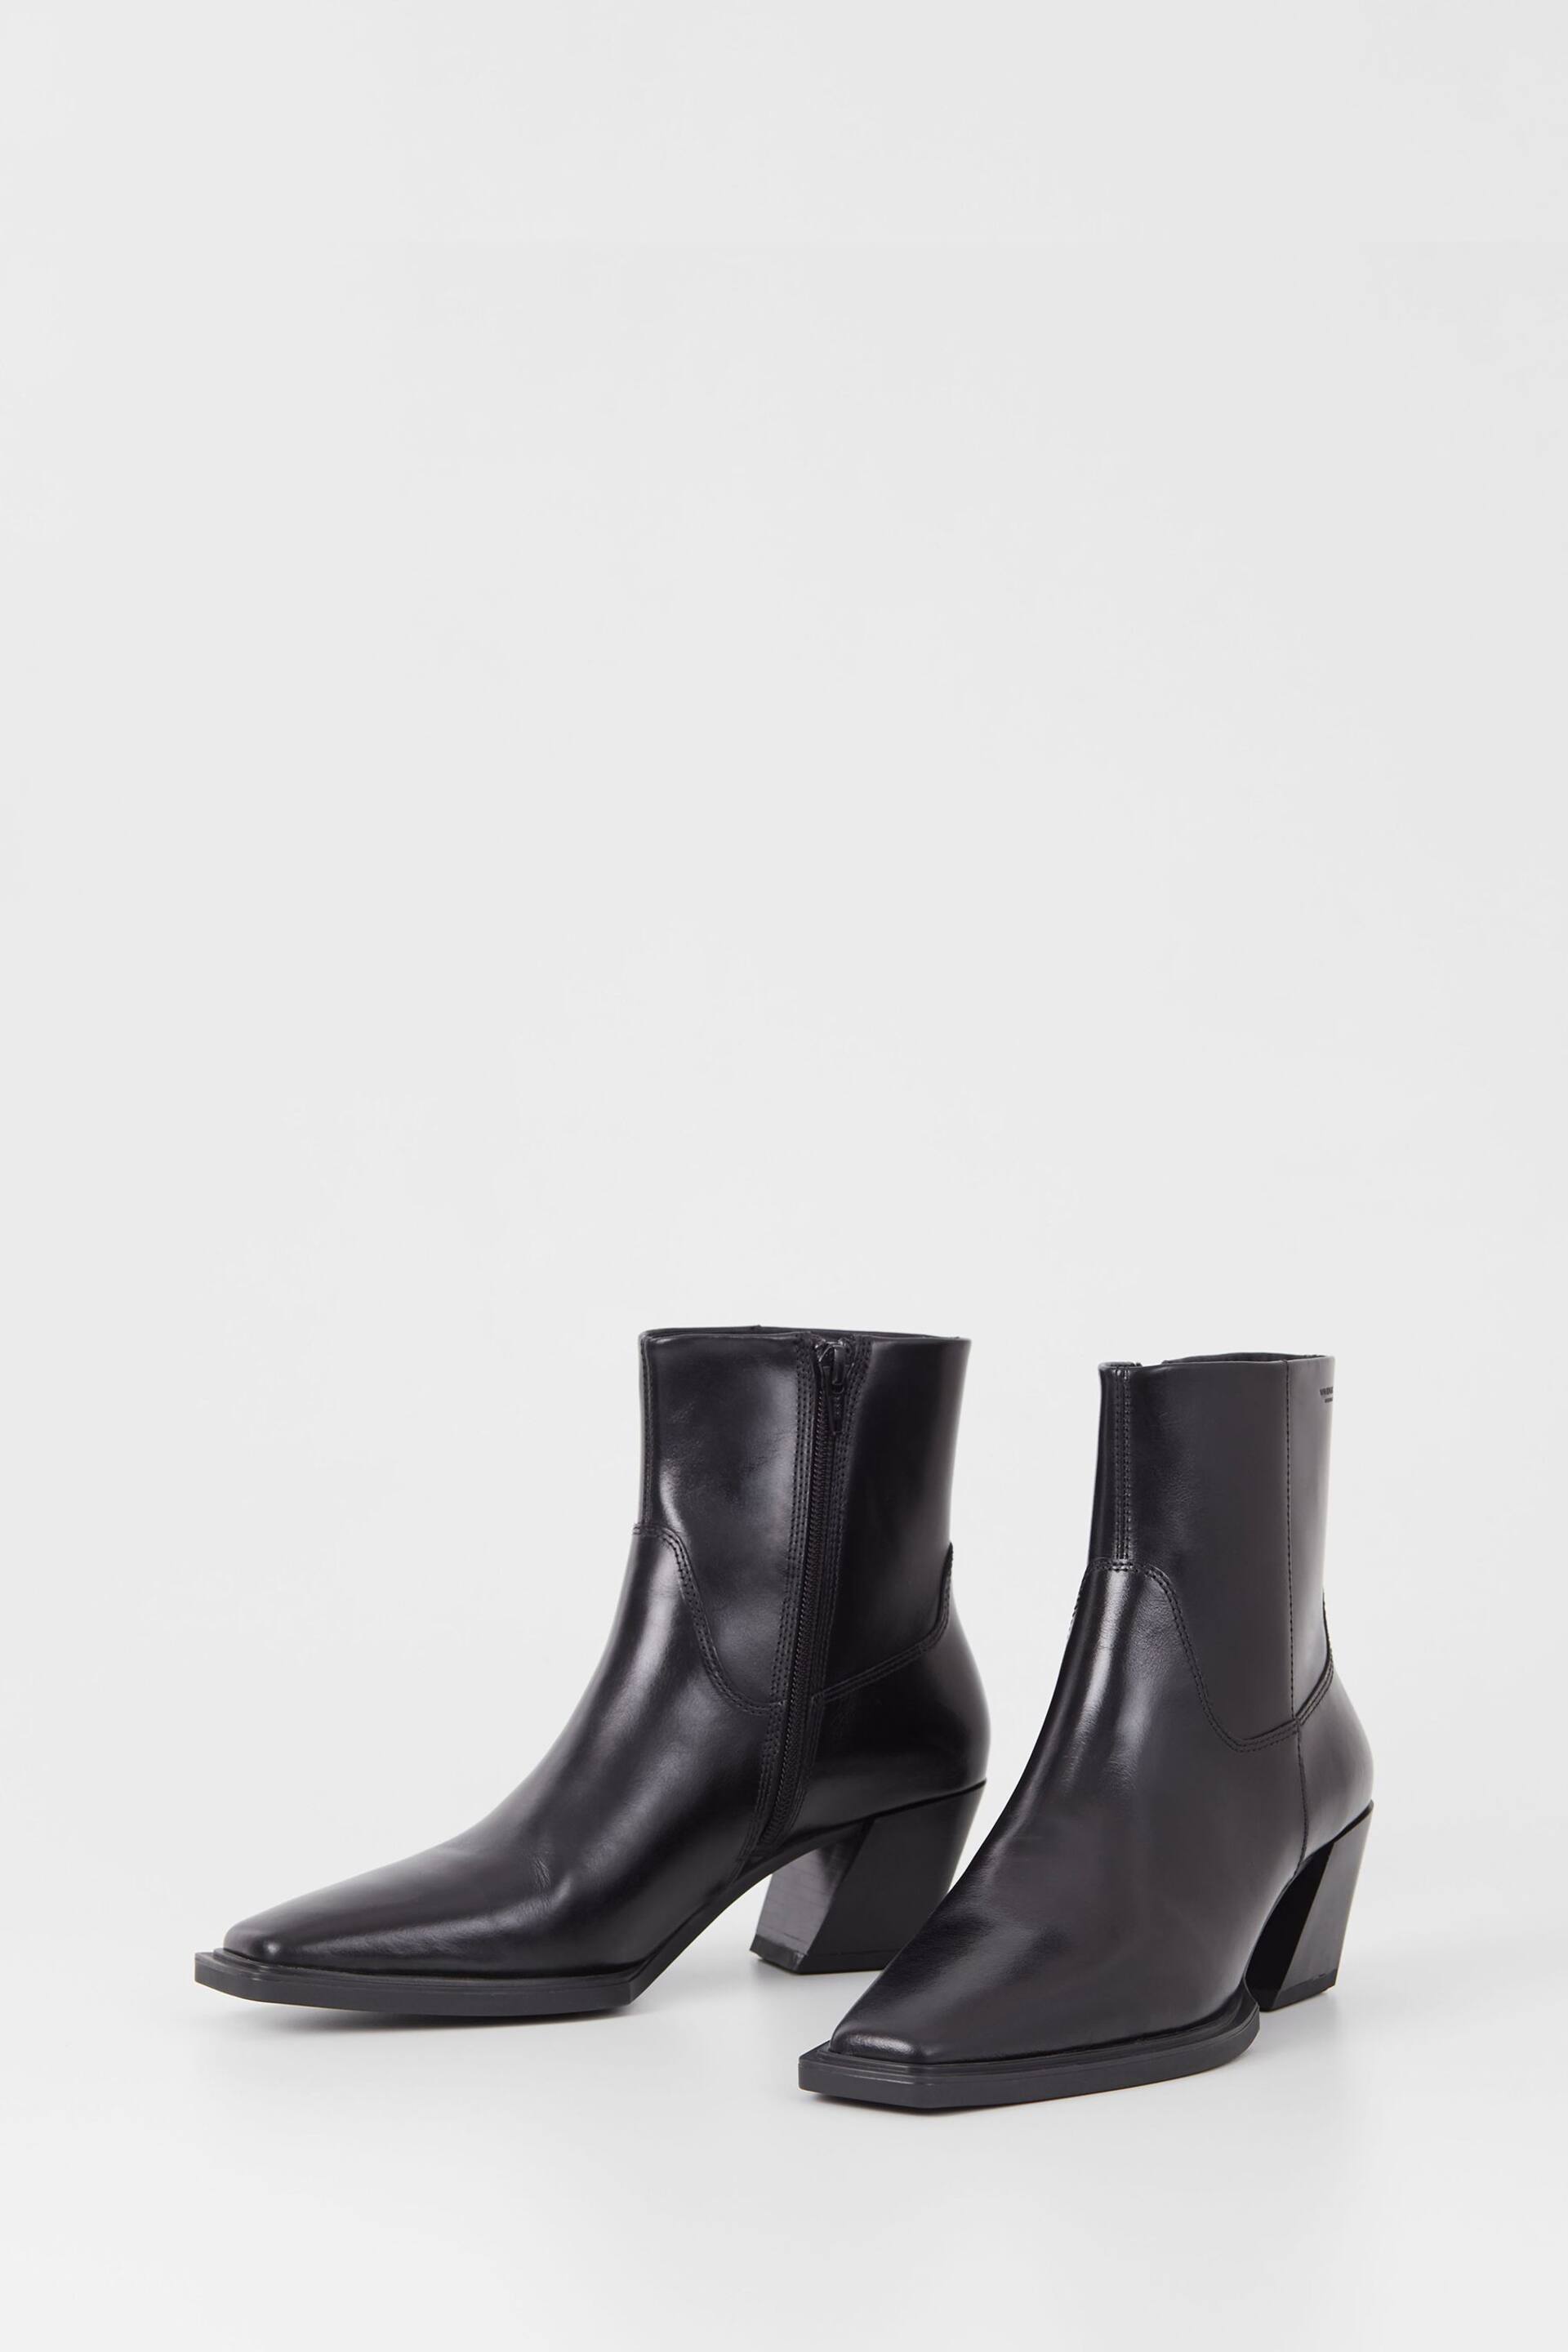 Vagabond Shoemakers Alina Western Black Boots - Image 2 of 3